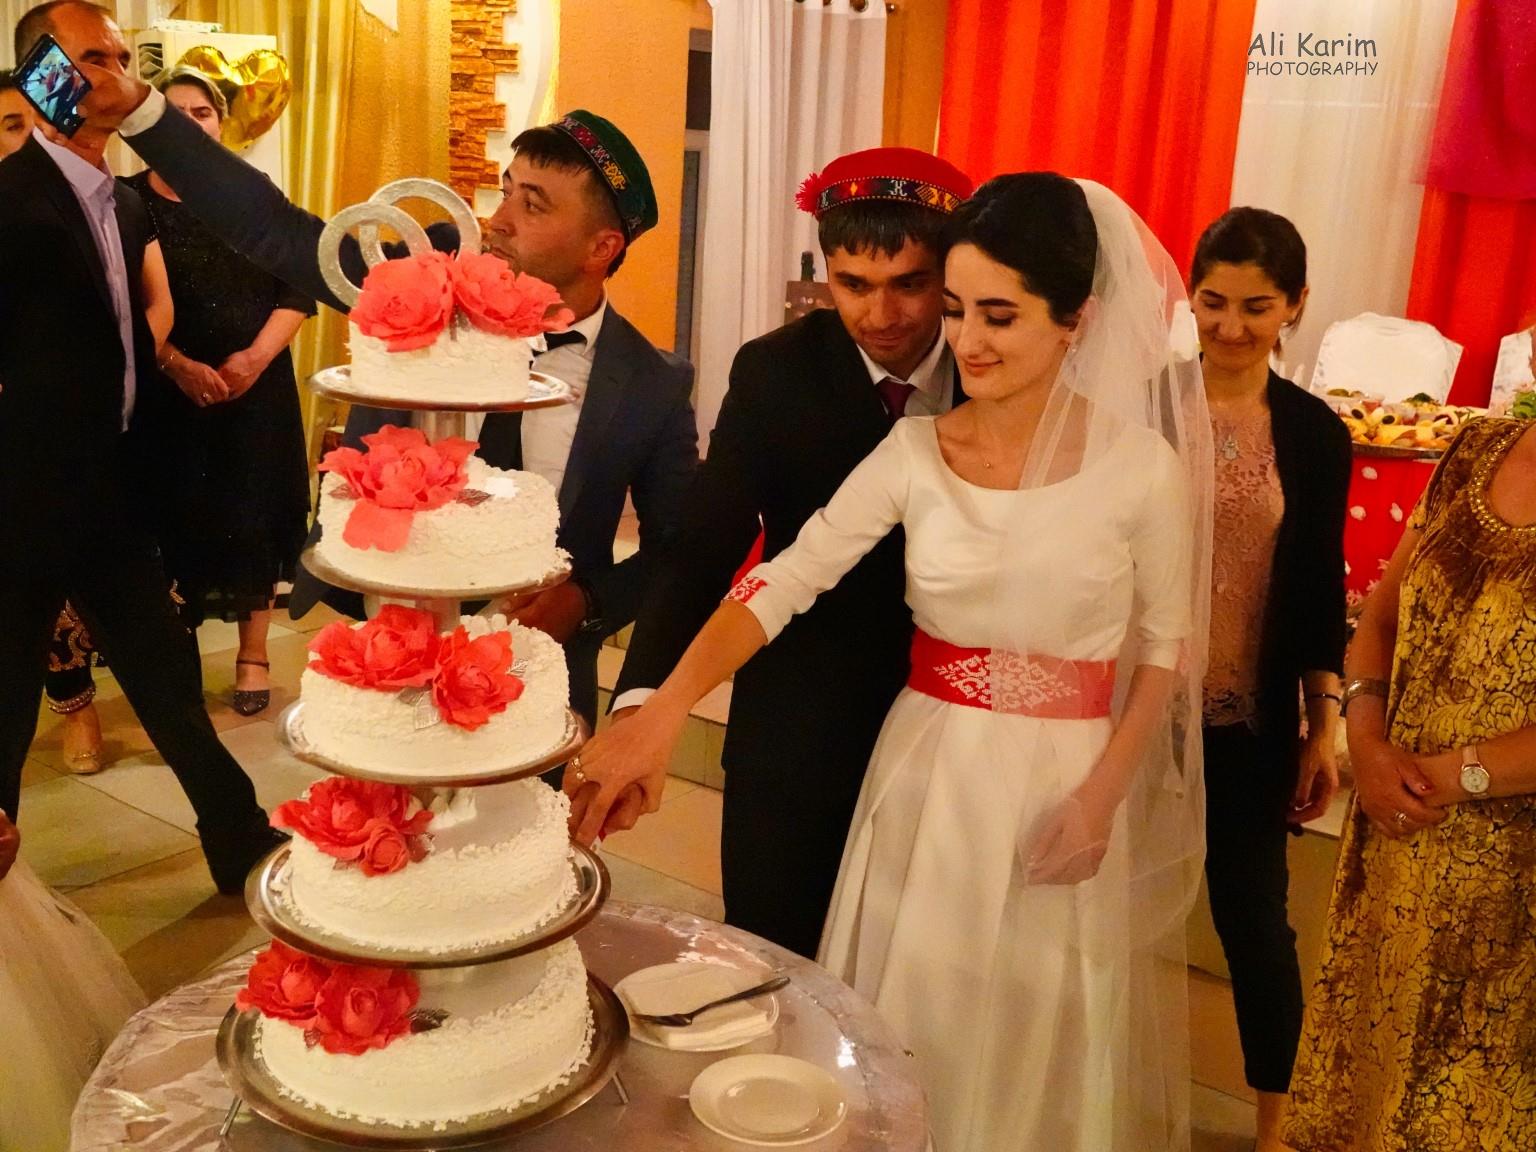 Onto Khorog, Tajikistan, The wedding couple cut the cake